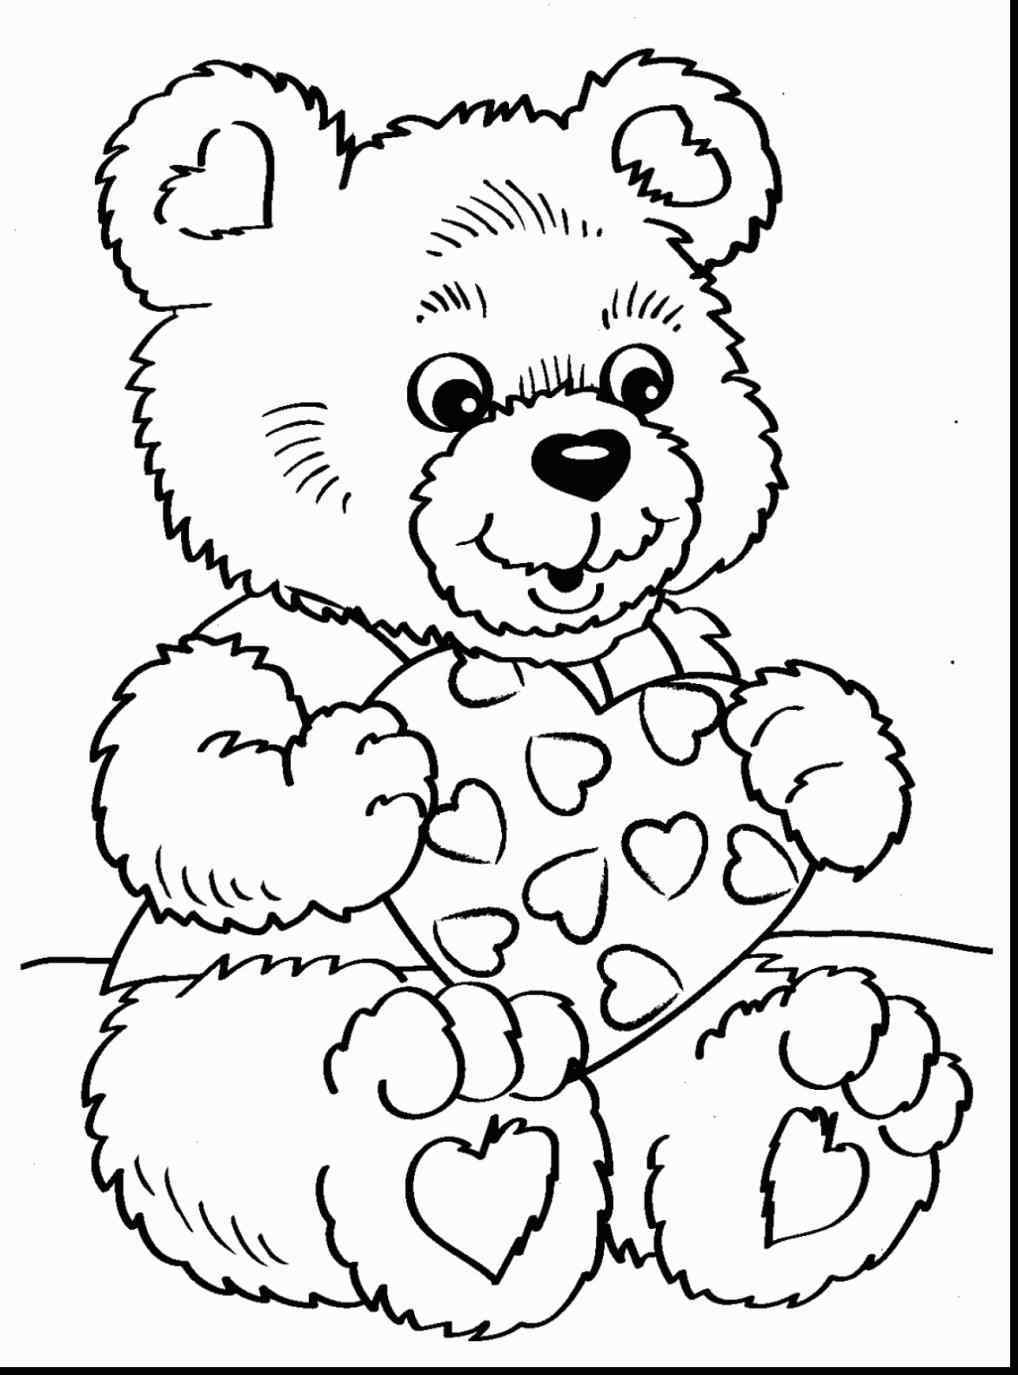 printable-teddy-bear-coloring-page-print-color-craft